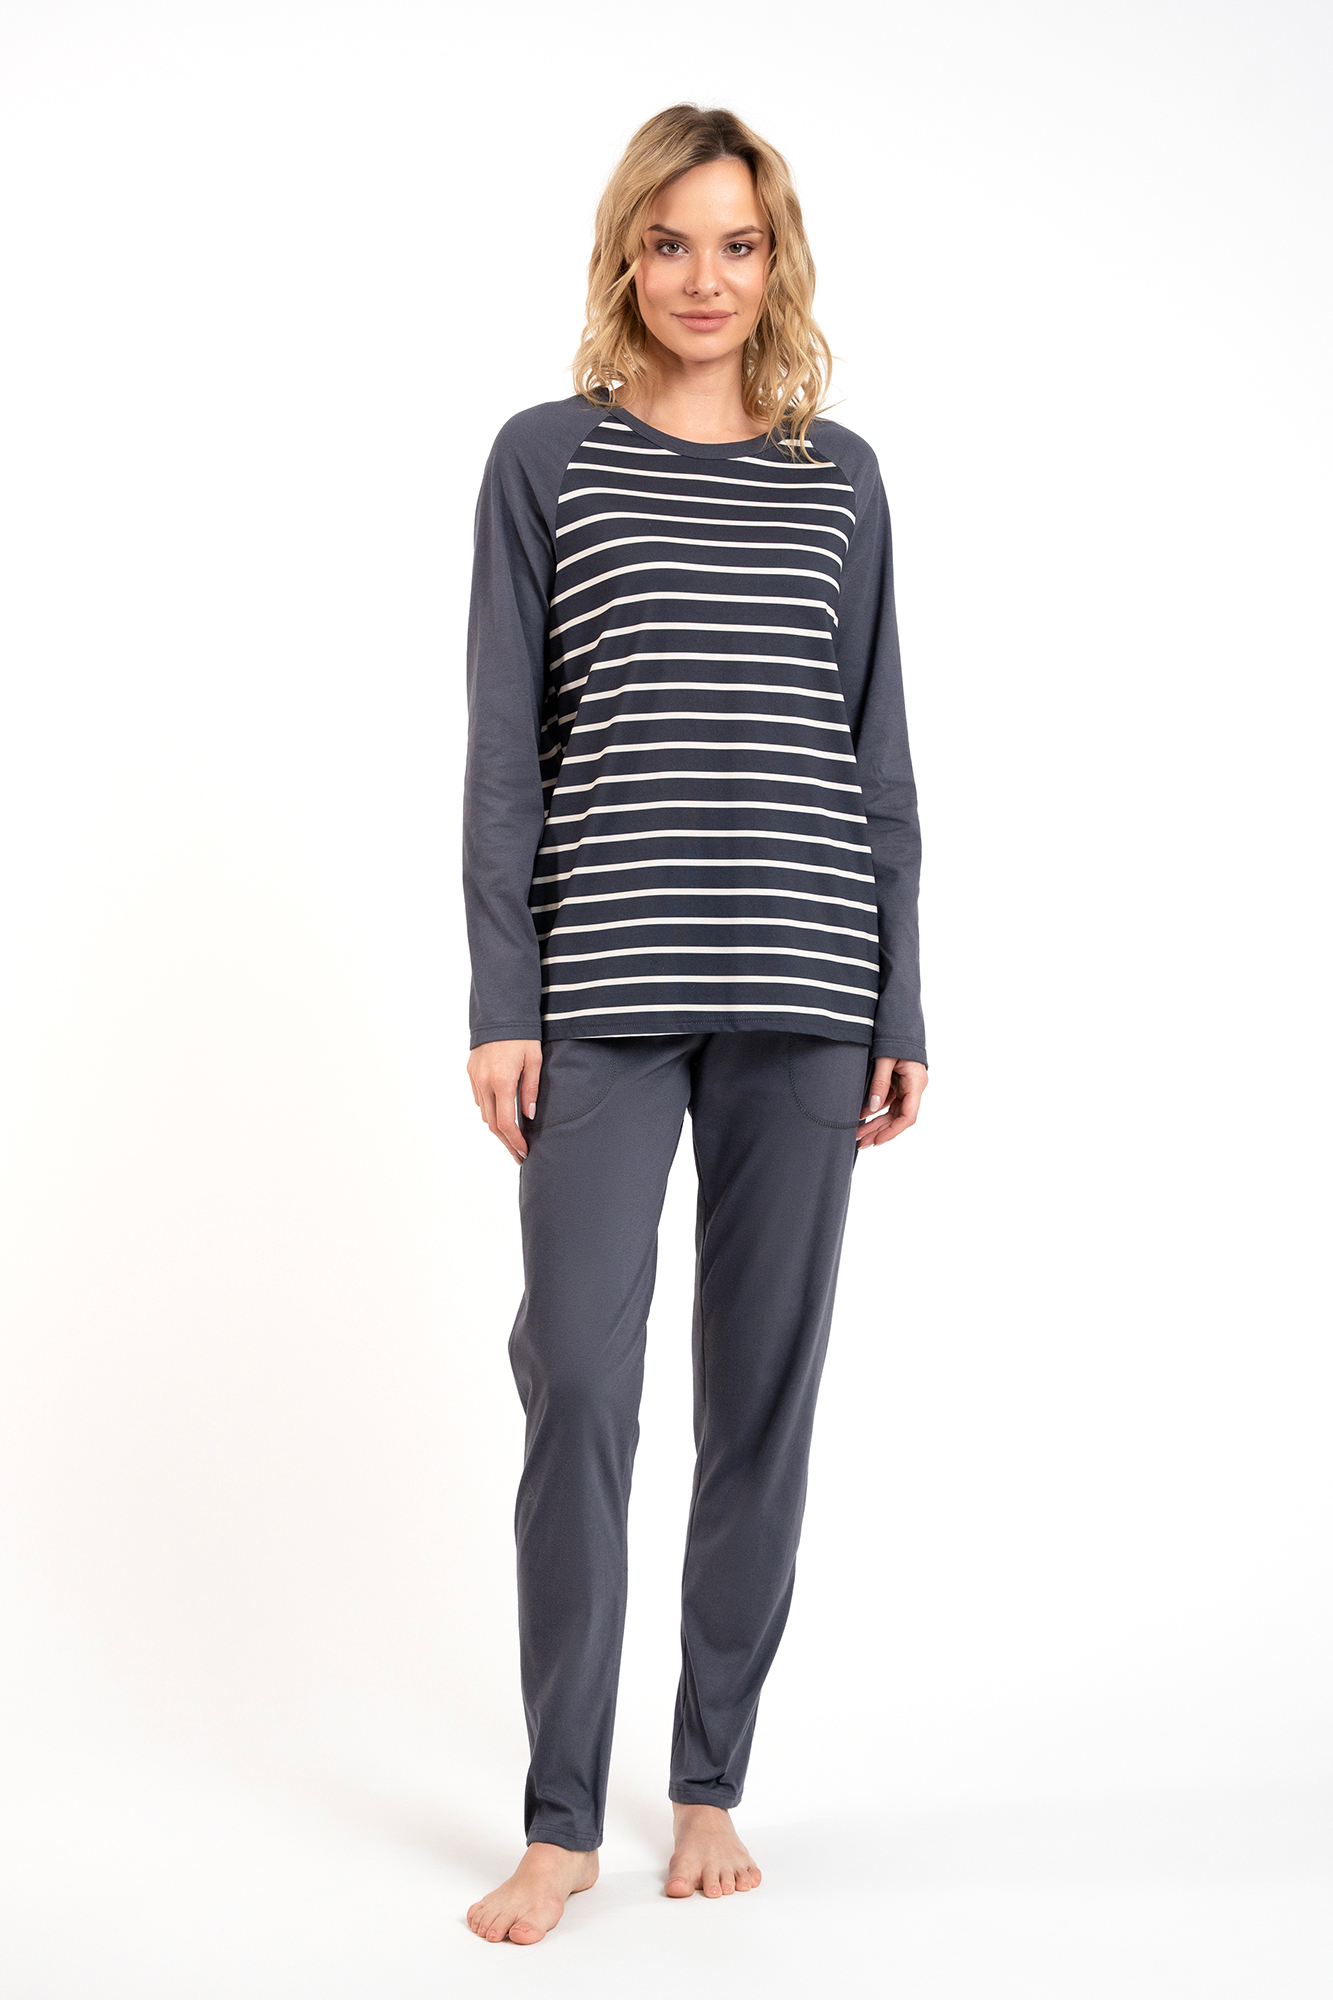 Women's pyjamas Oda long sleeves, long legs - graphite/graphite print